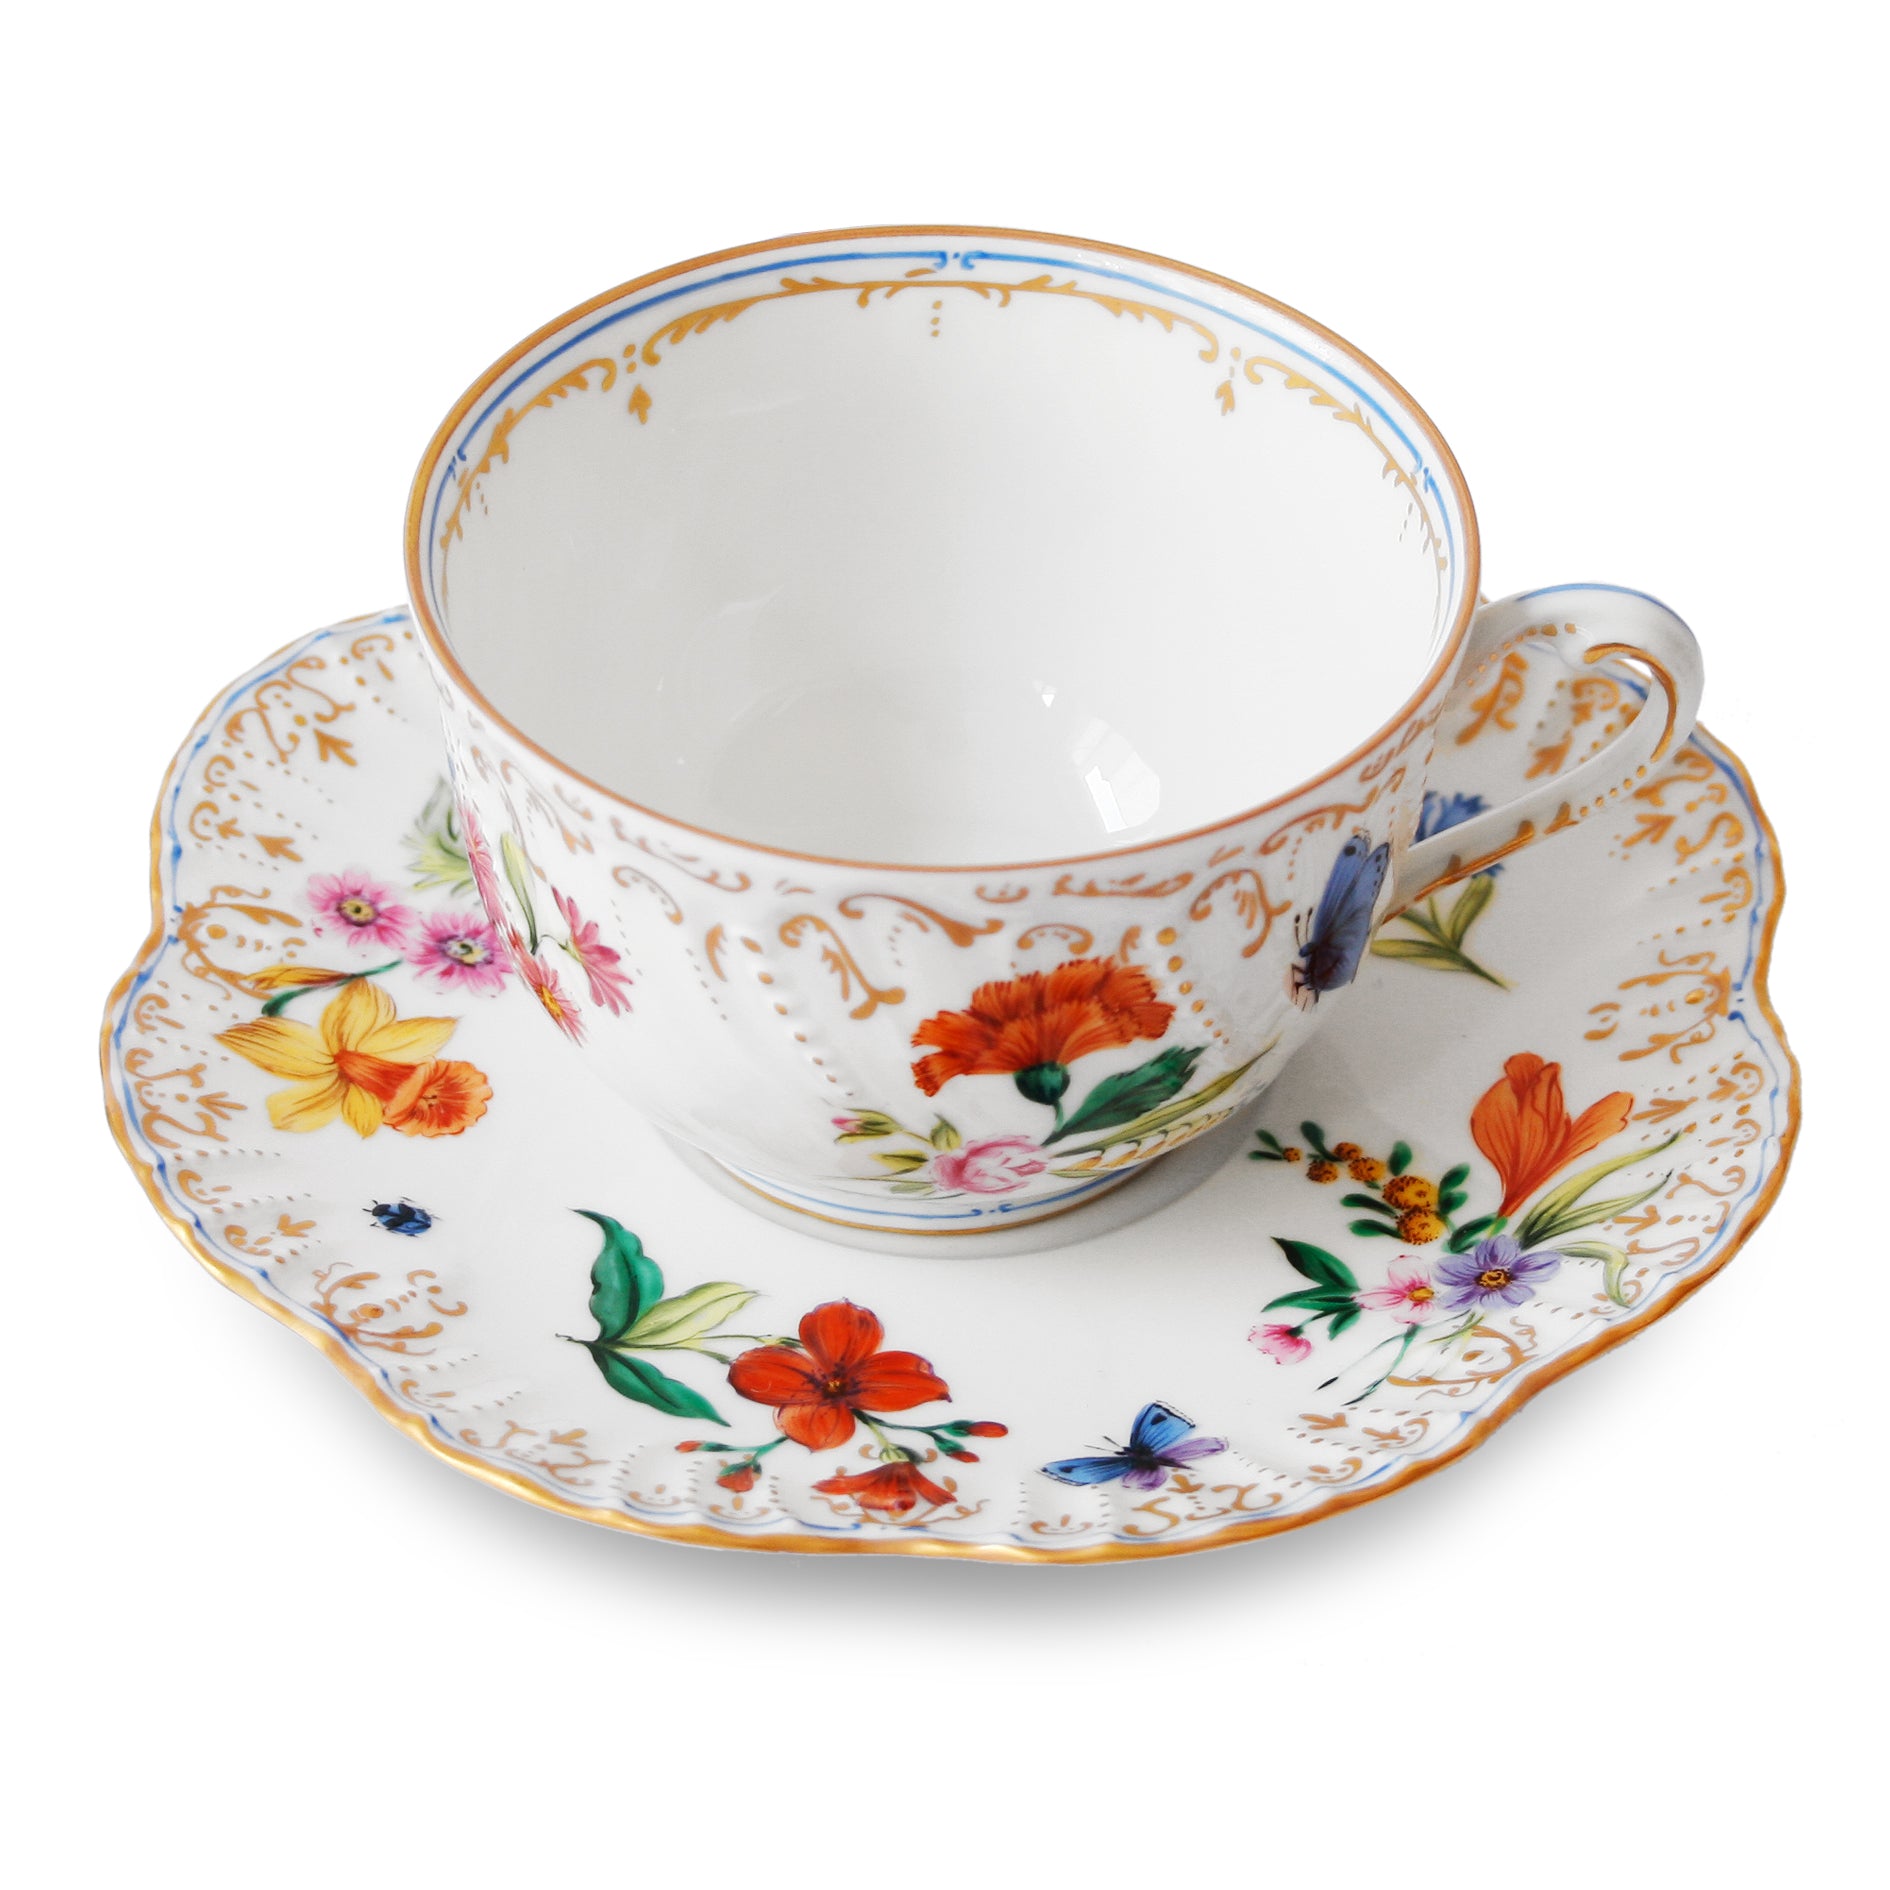 Belles Saisons - Tea cup and saucer
